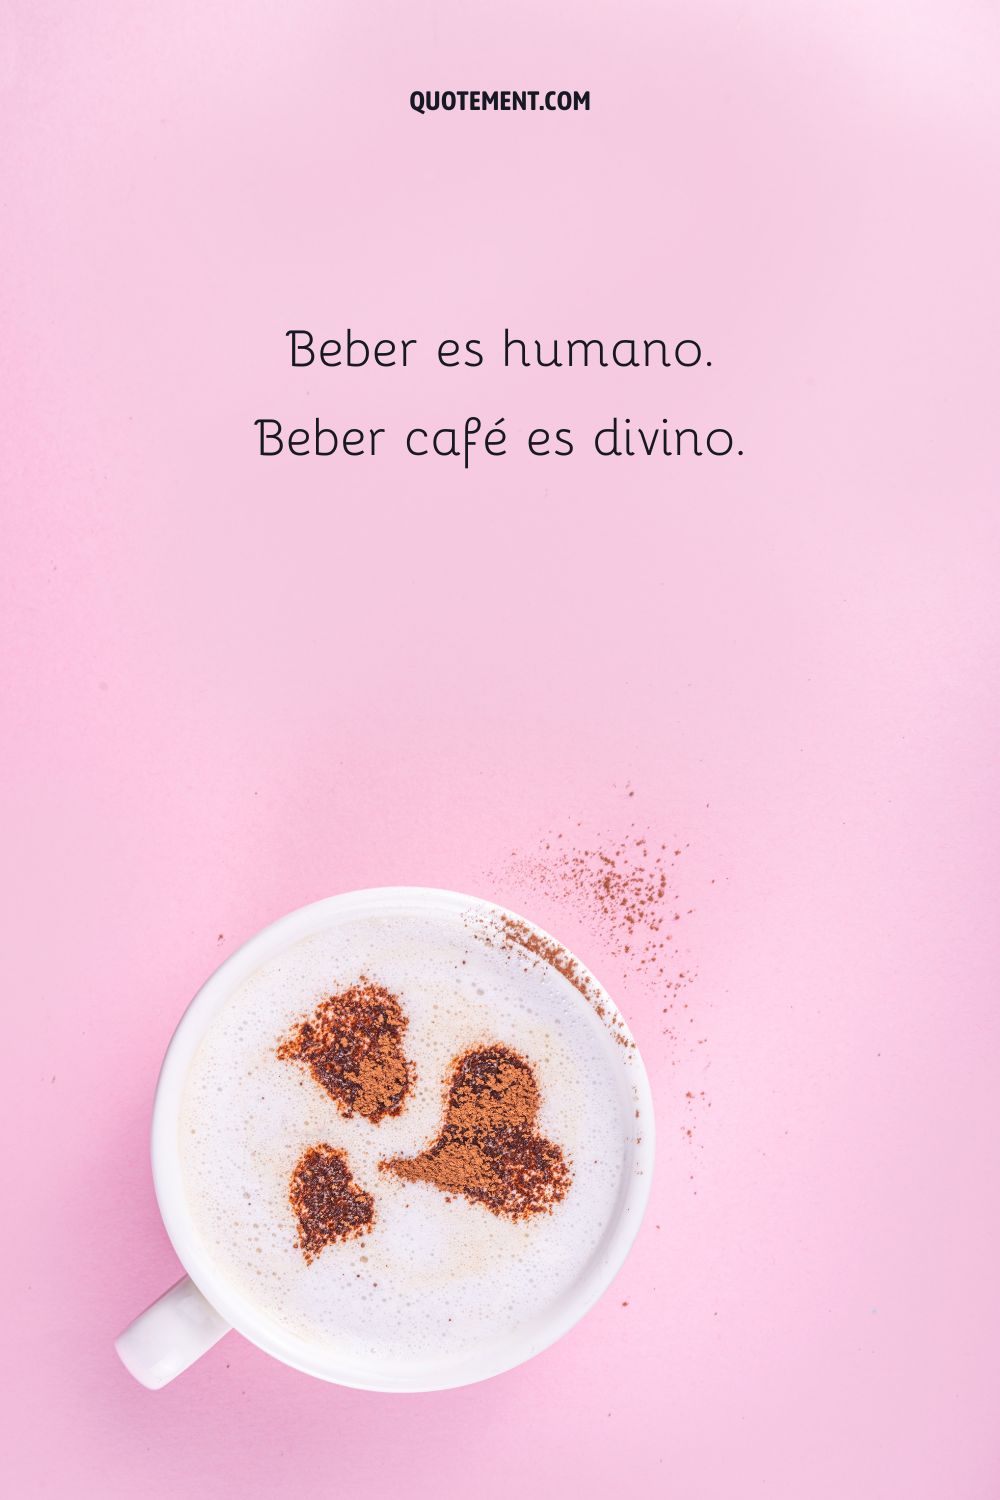 Beber es humano. Beber café es divino